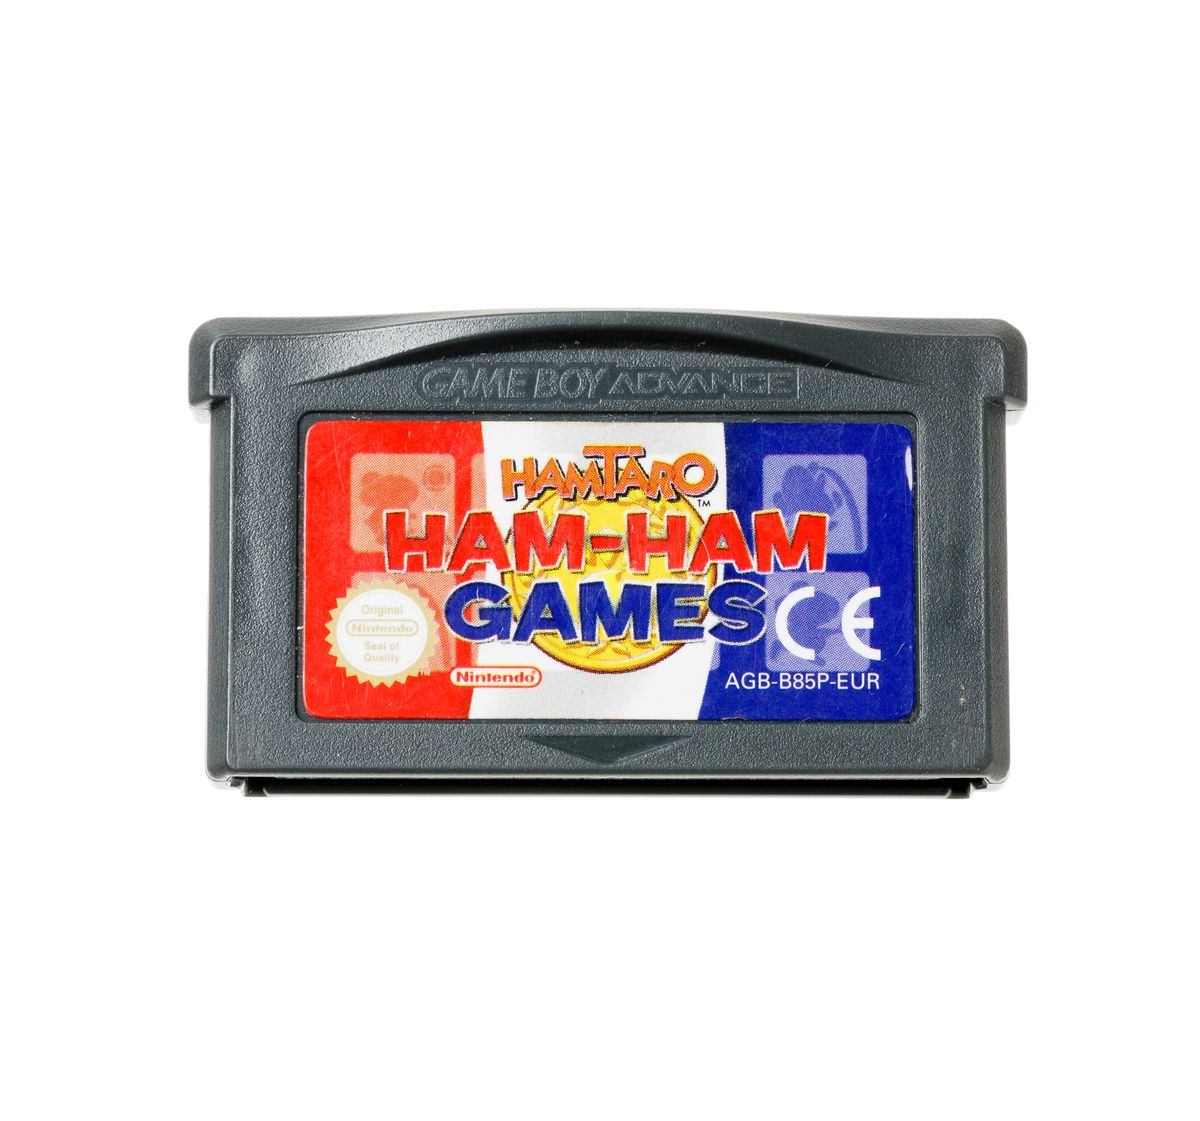 HamTaro Ham-Ham Games - Gameboy Advance Games